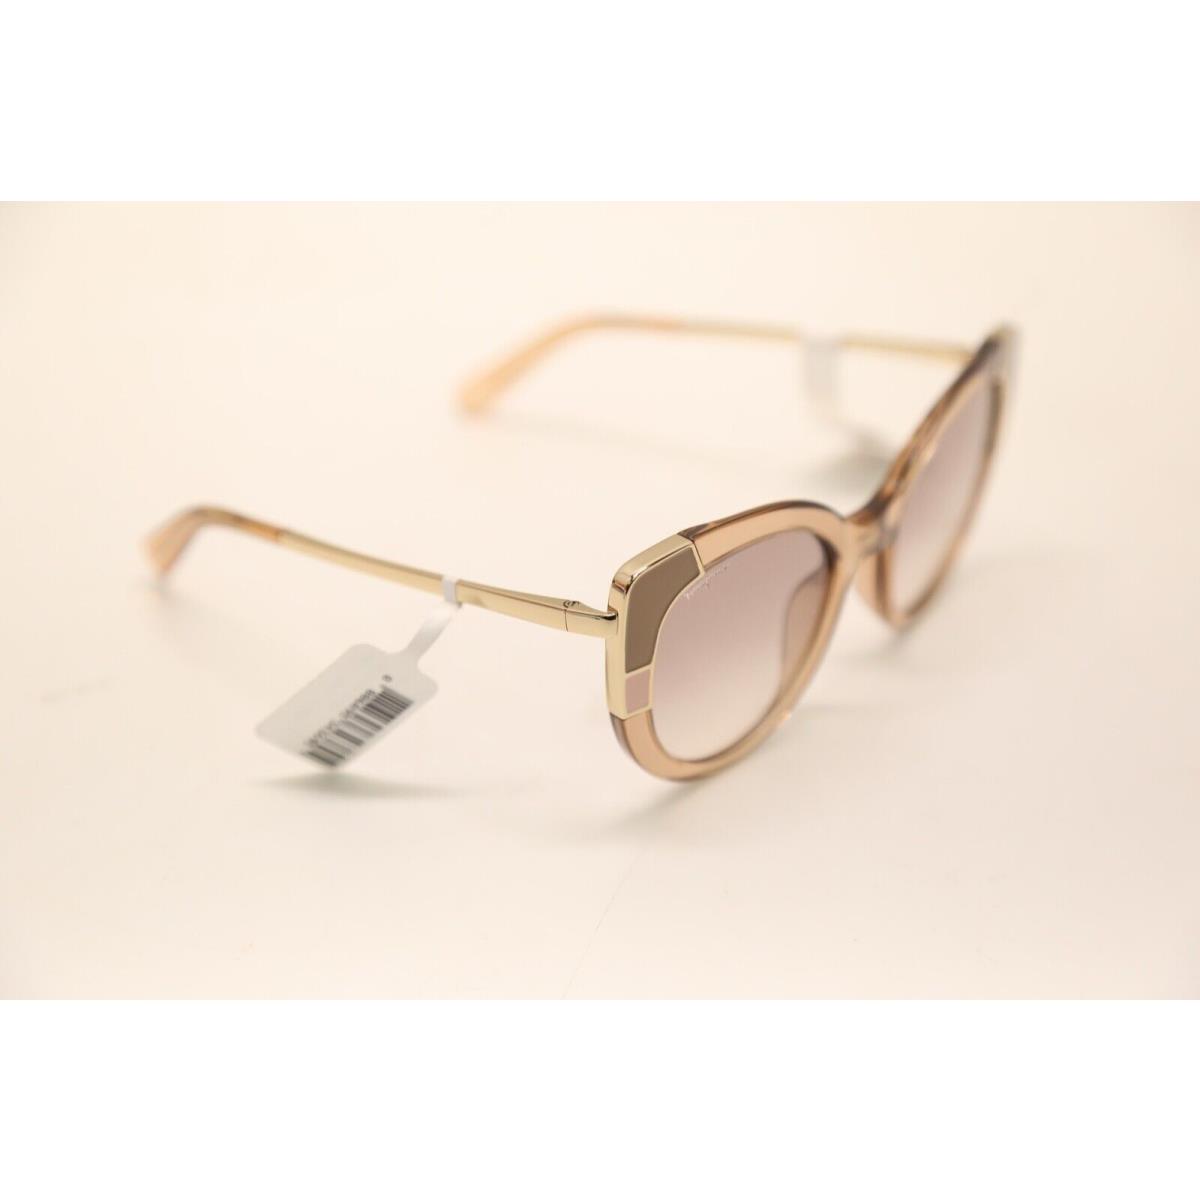 Salvatore Ferragamo sunglasses  - Nude Frame, Brown Lens 0